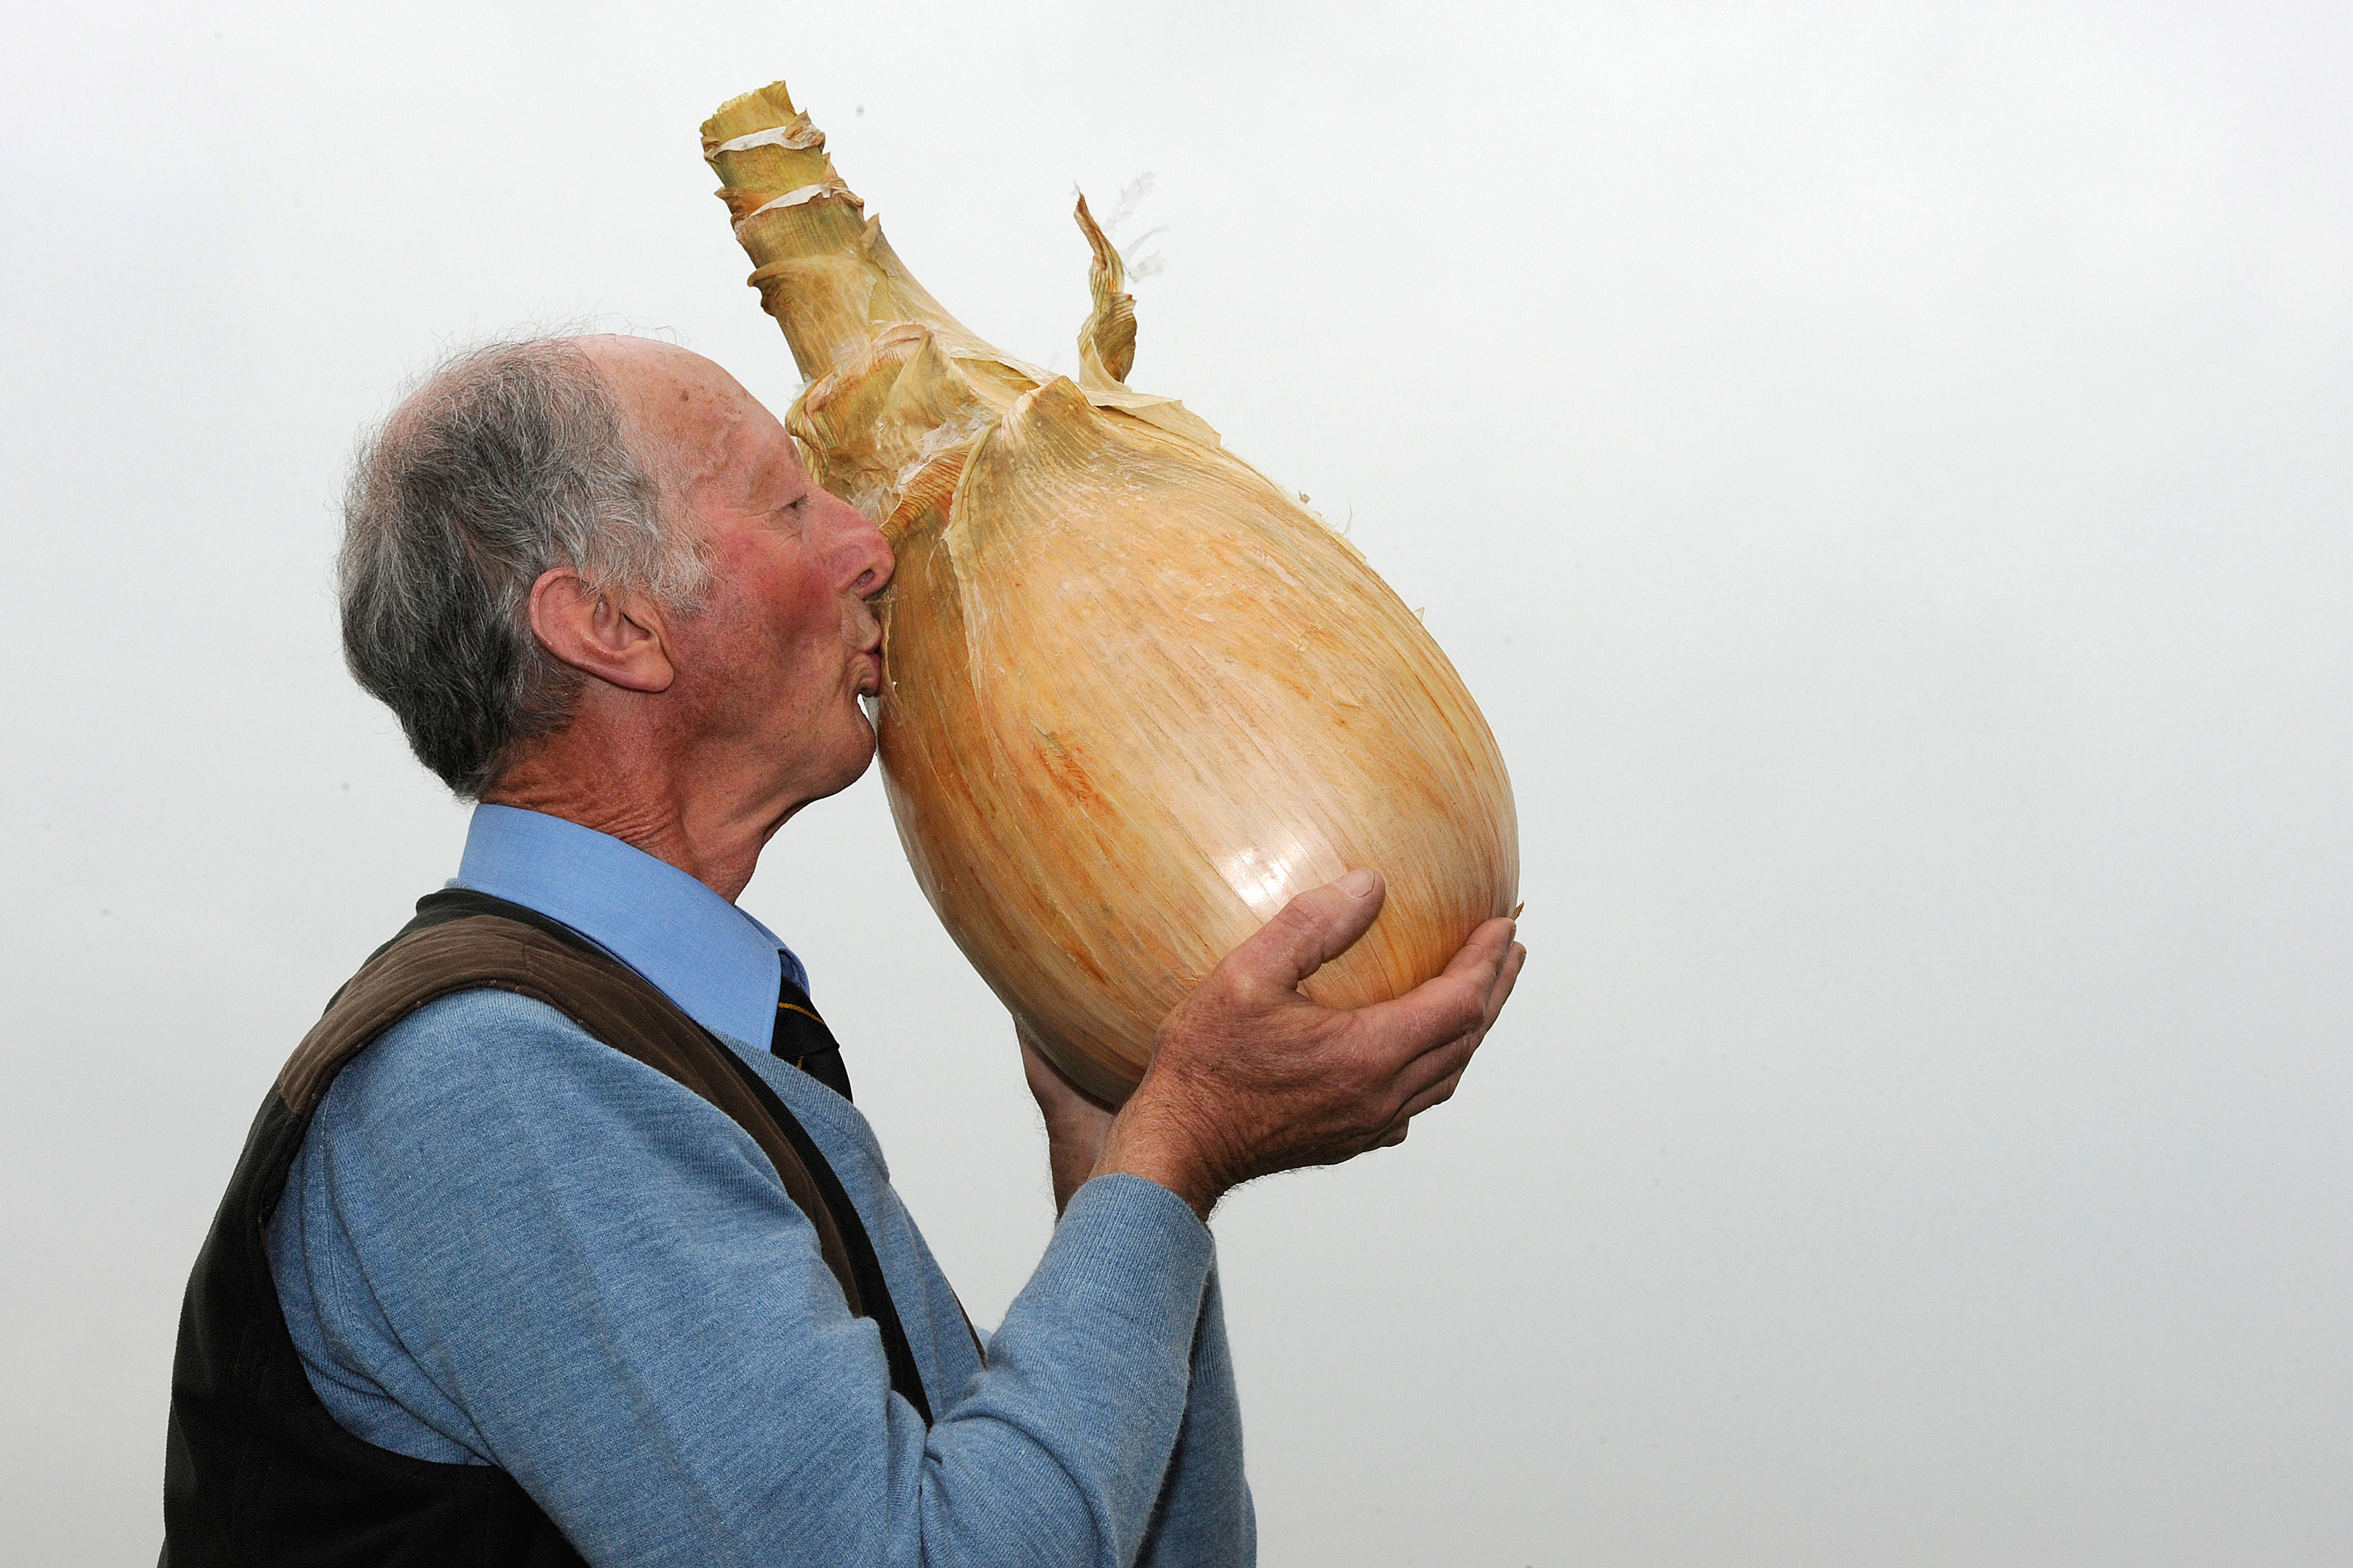 heaviest-onion-world-record